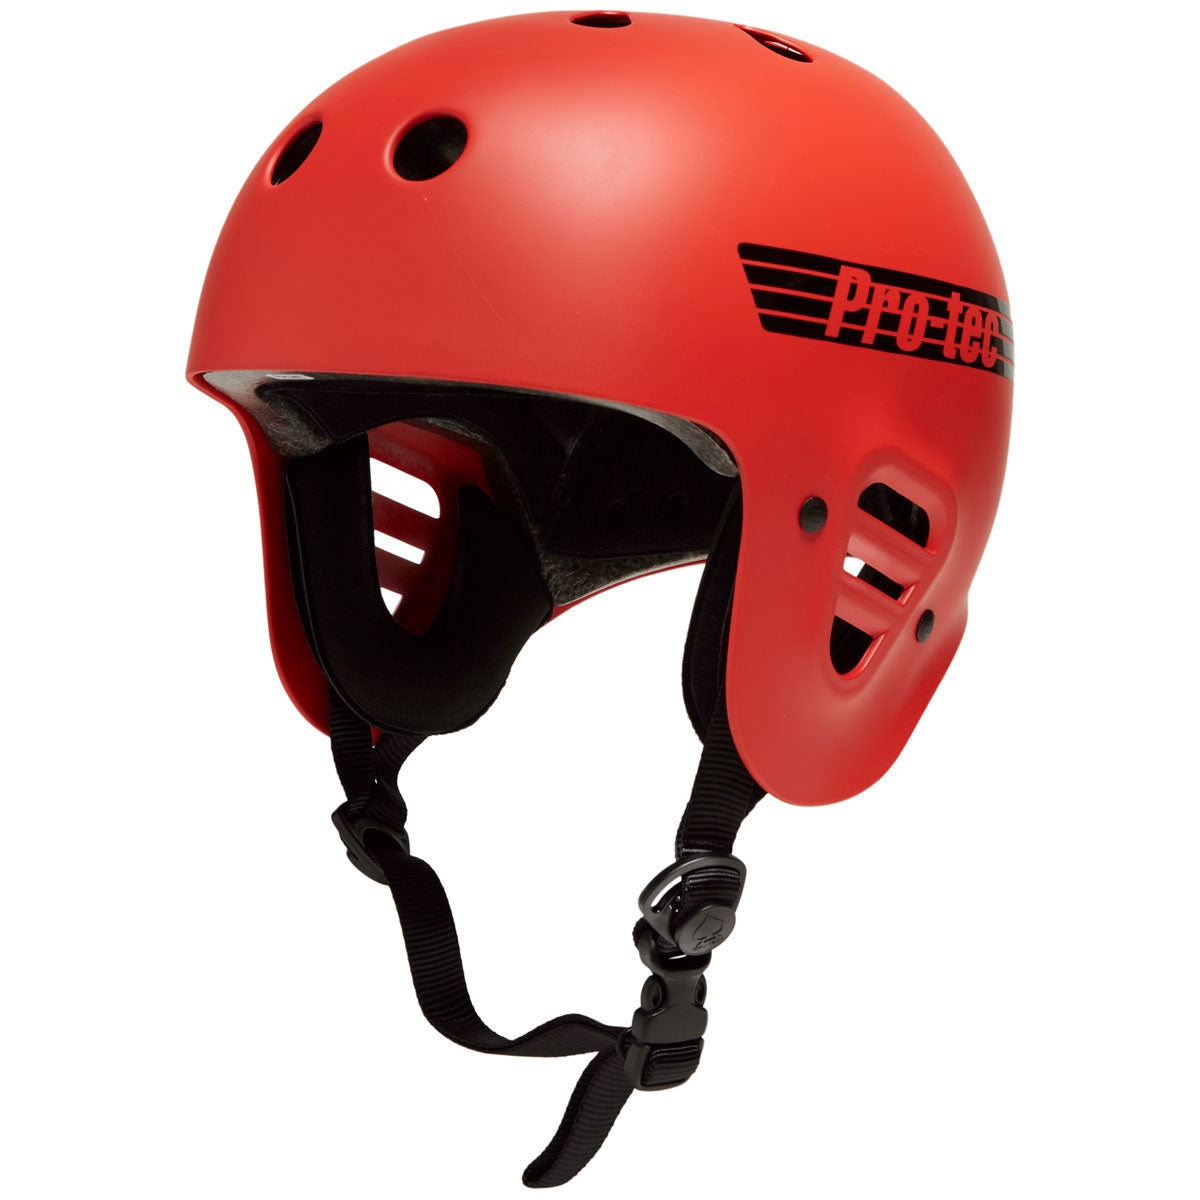 Pro-Tec Full Cut Certified Helmet - Matte Bright Red image 1